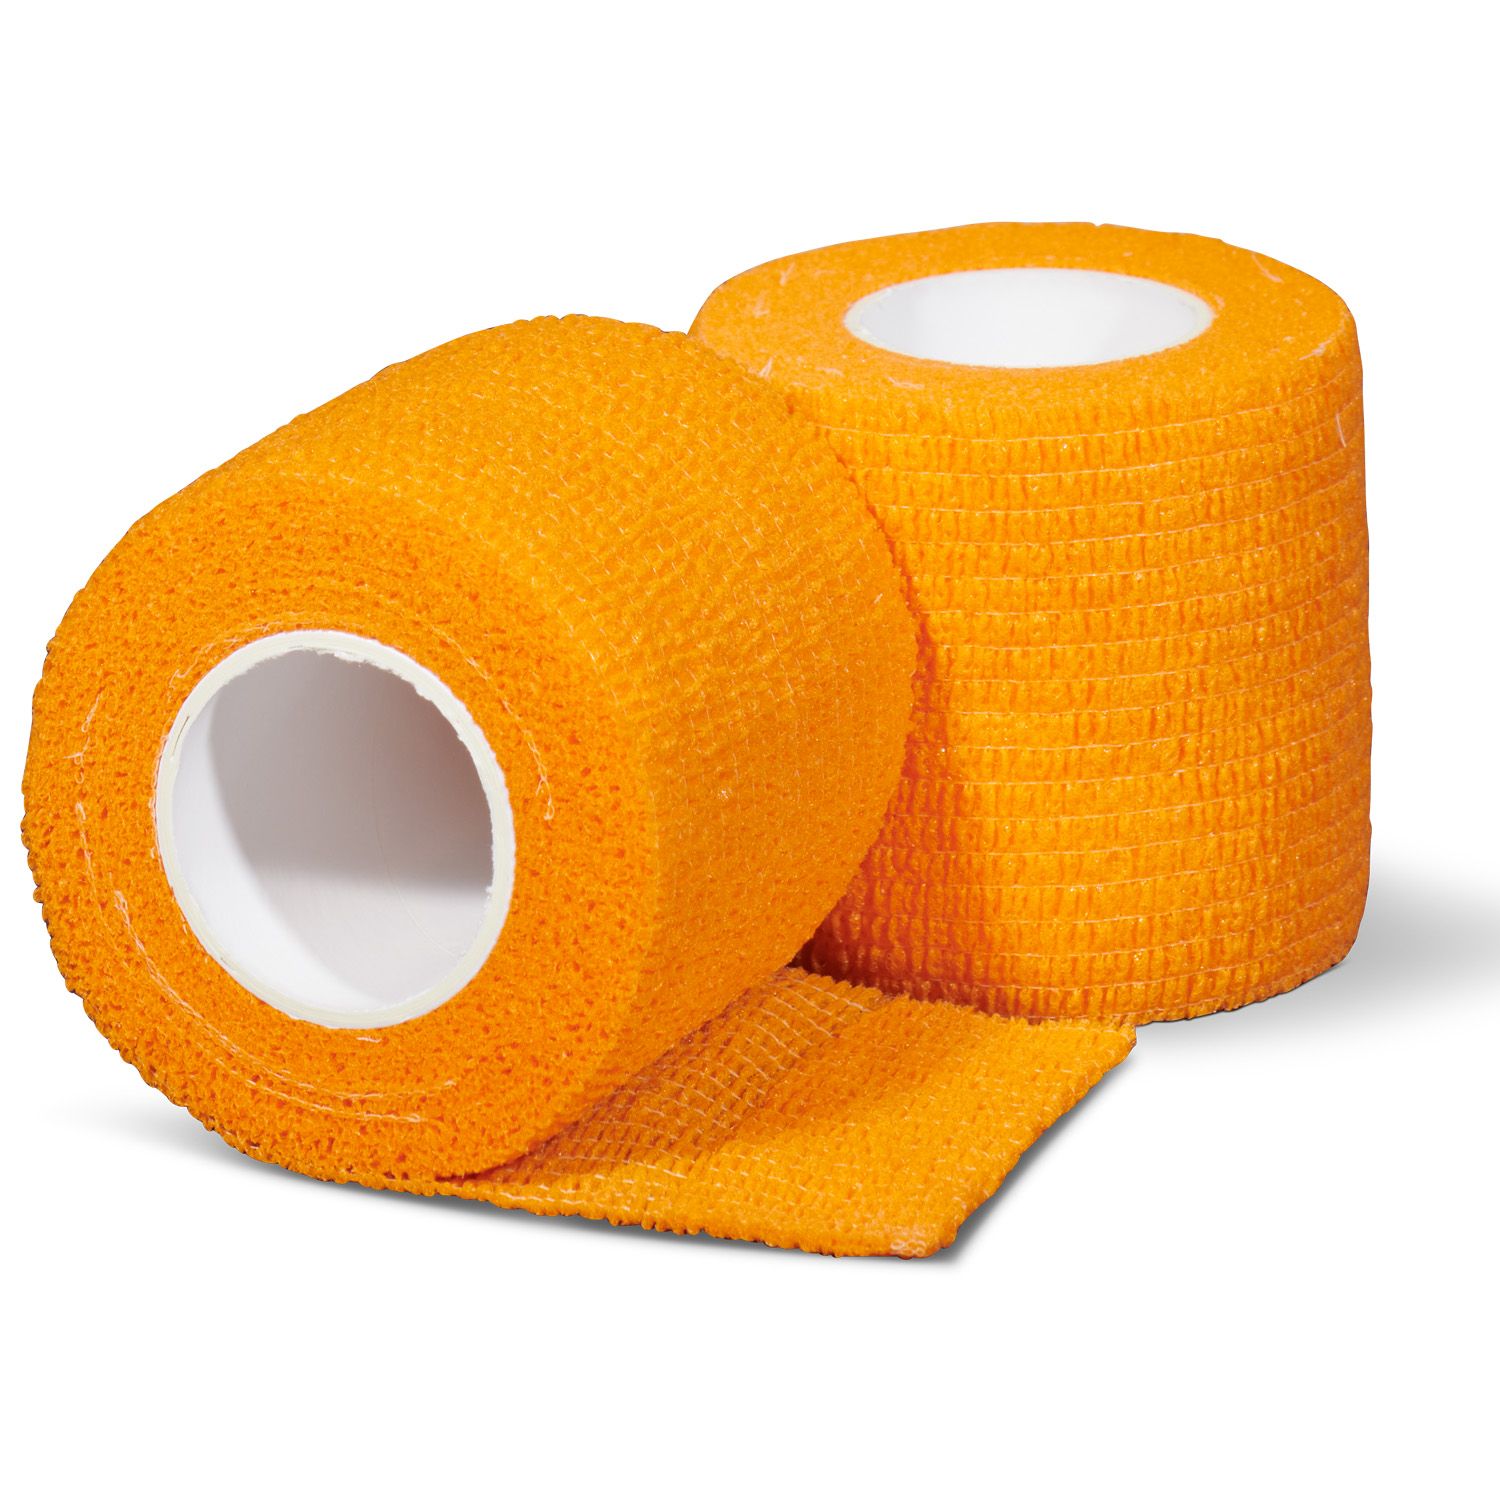 gladiator sports underwrap bandage per 12 rolls orange